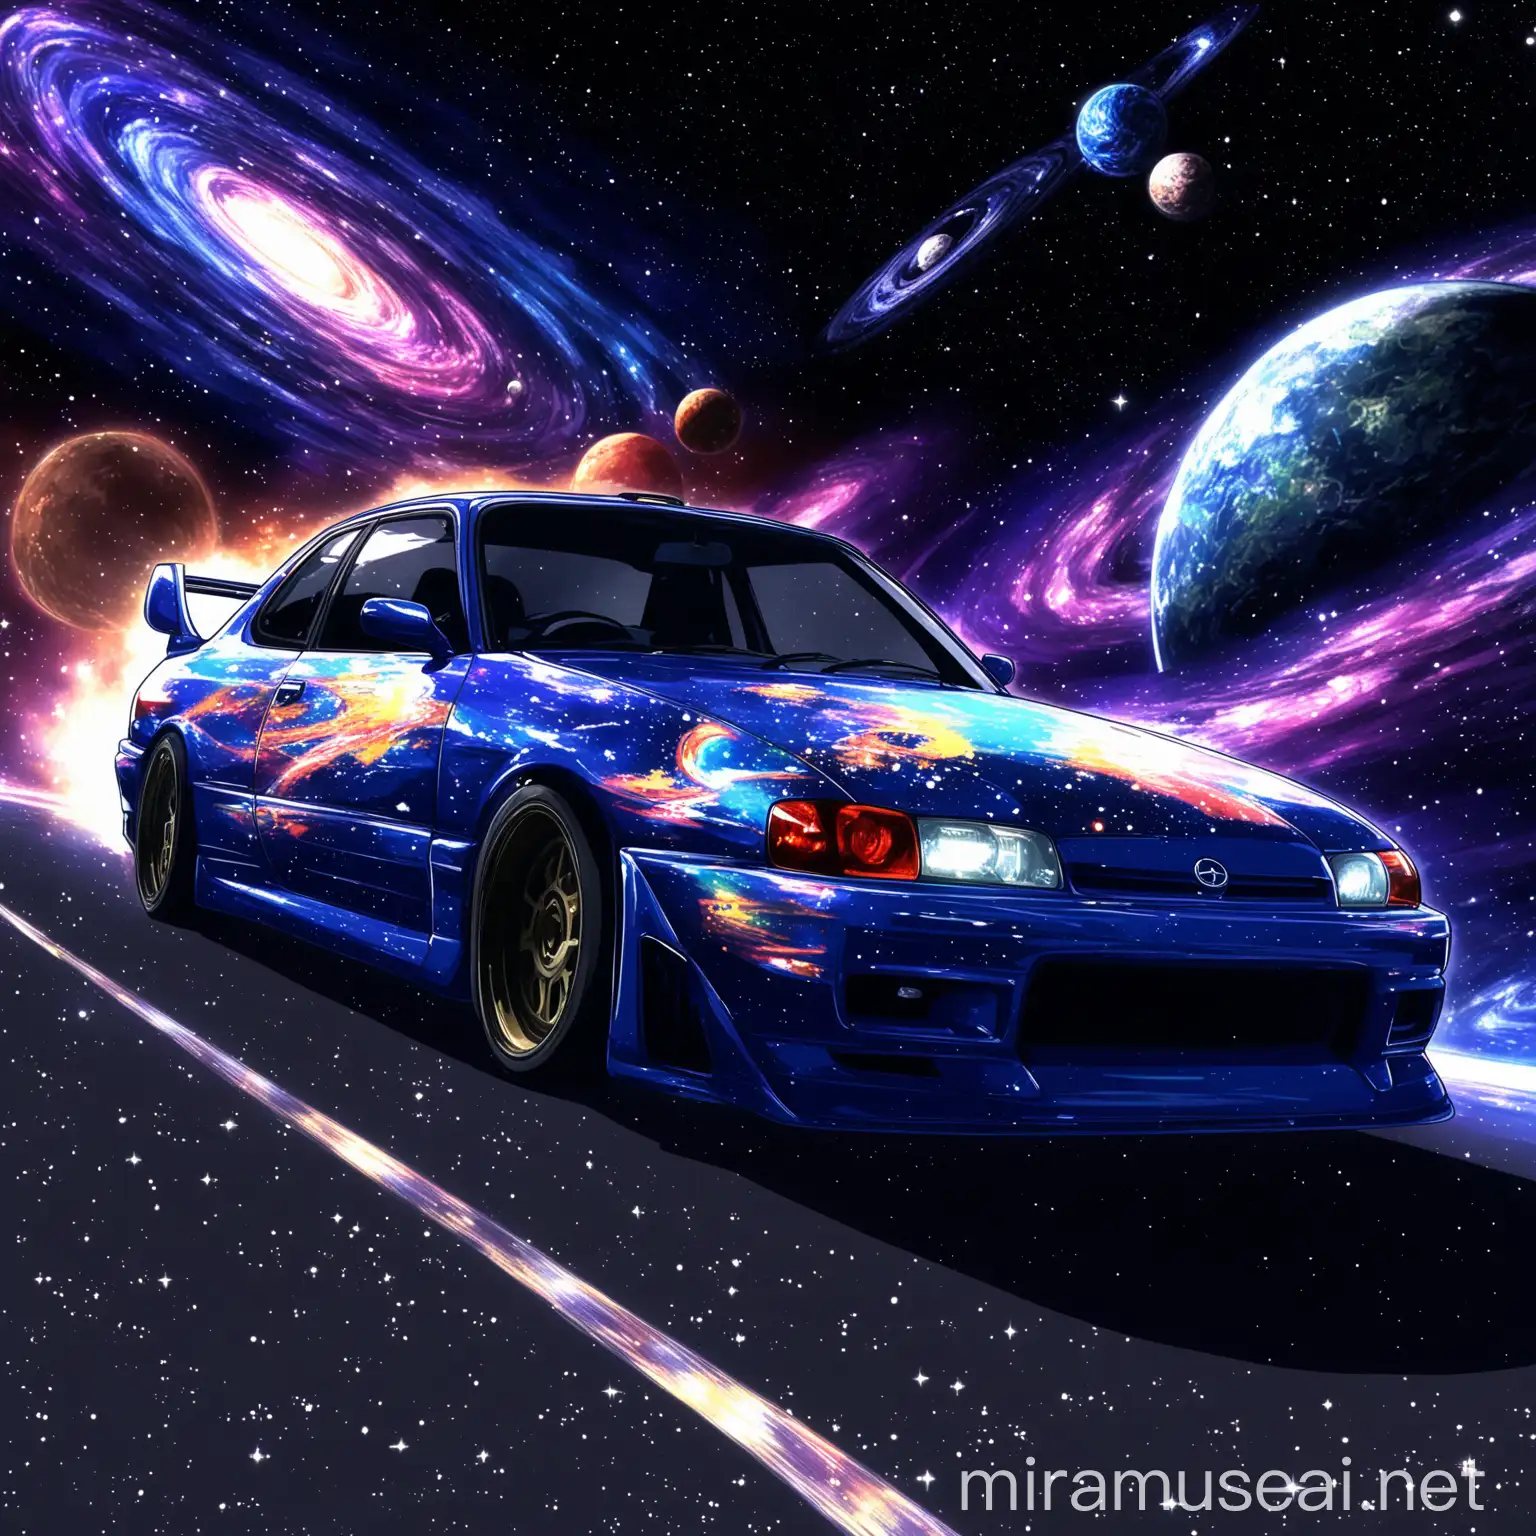 Anime Man Driving JDM Car Through the Galaxy